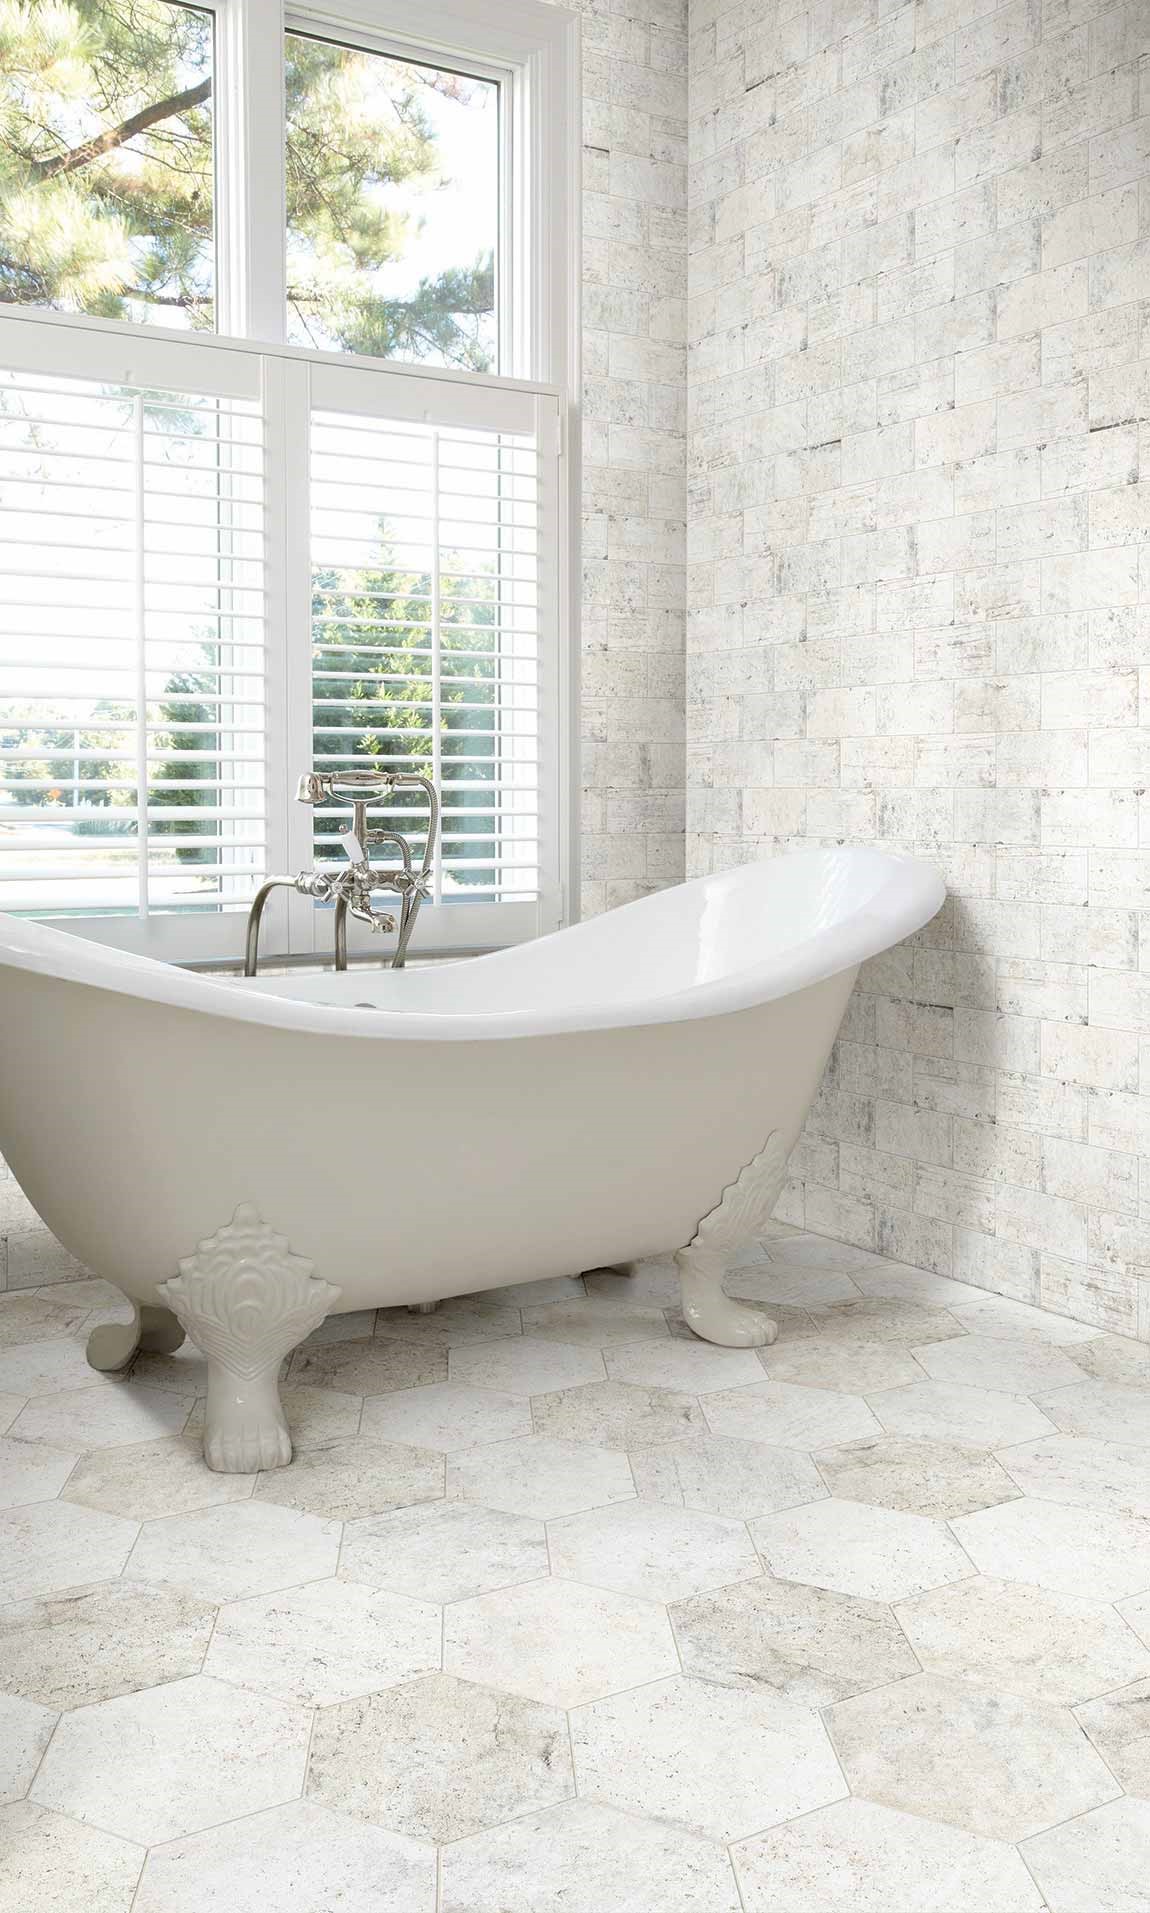 reestanding bathtub in light colored bathroom with ceramic tile